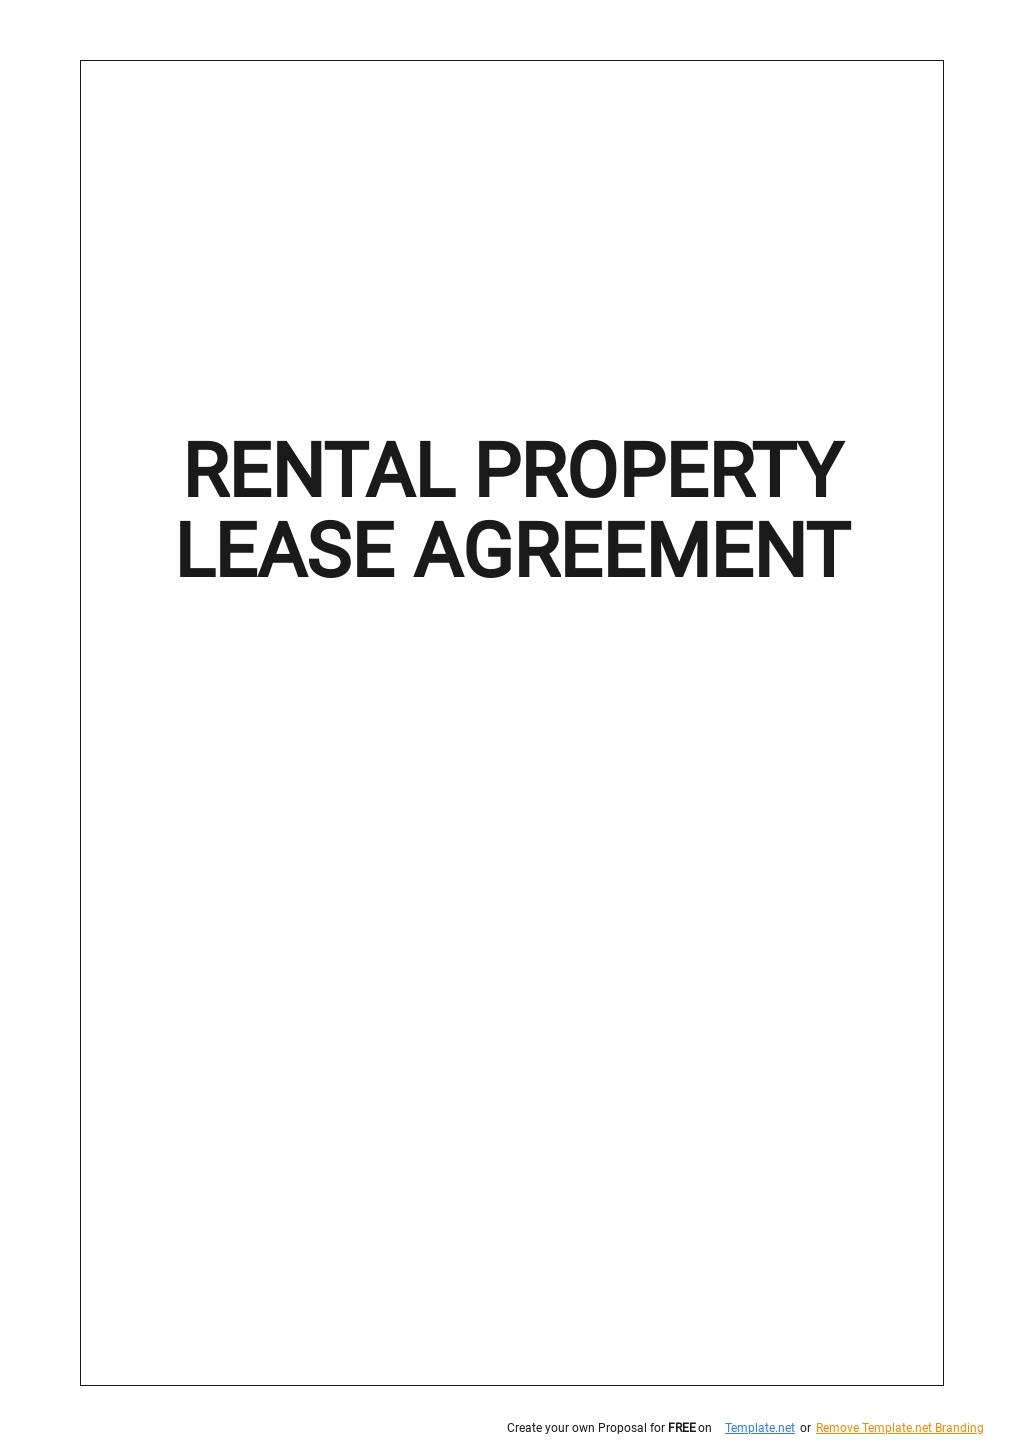 Rental Property Lease Agreement Template Google Docs, Word, Apple